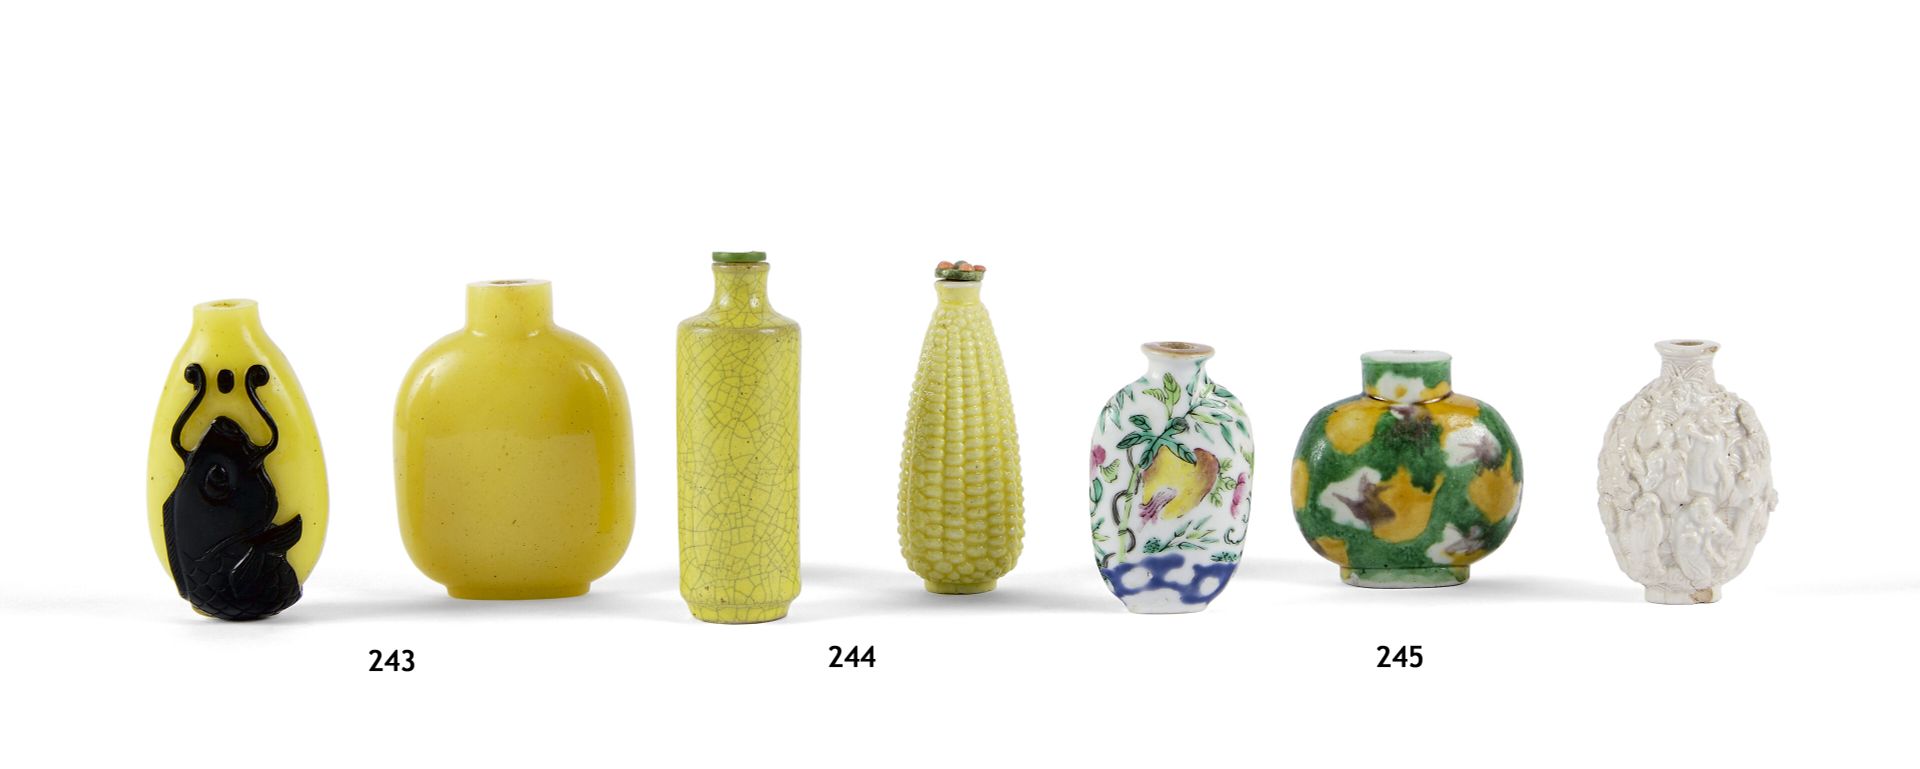 Null 中国 - 19世纪
玉米棒形状的黄釉瓷鼻烟壶。
高：7,3厘米
绿色的盖子上装饰着小的珊瑚凸圆形，形成一个顶点。 
黄釉瓷鼻烟壶，有裂纹的珐琅边，高：&hellip;